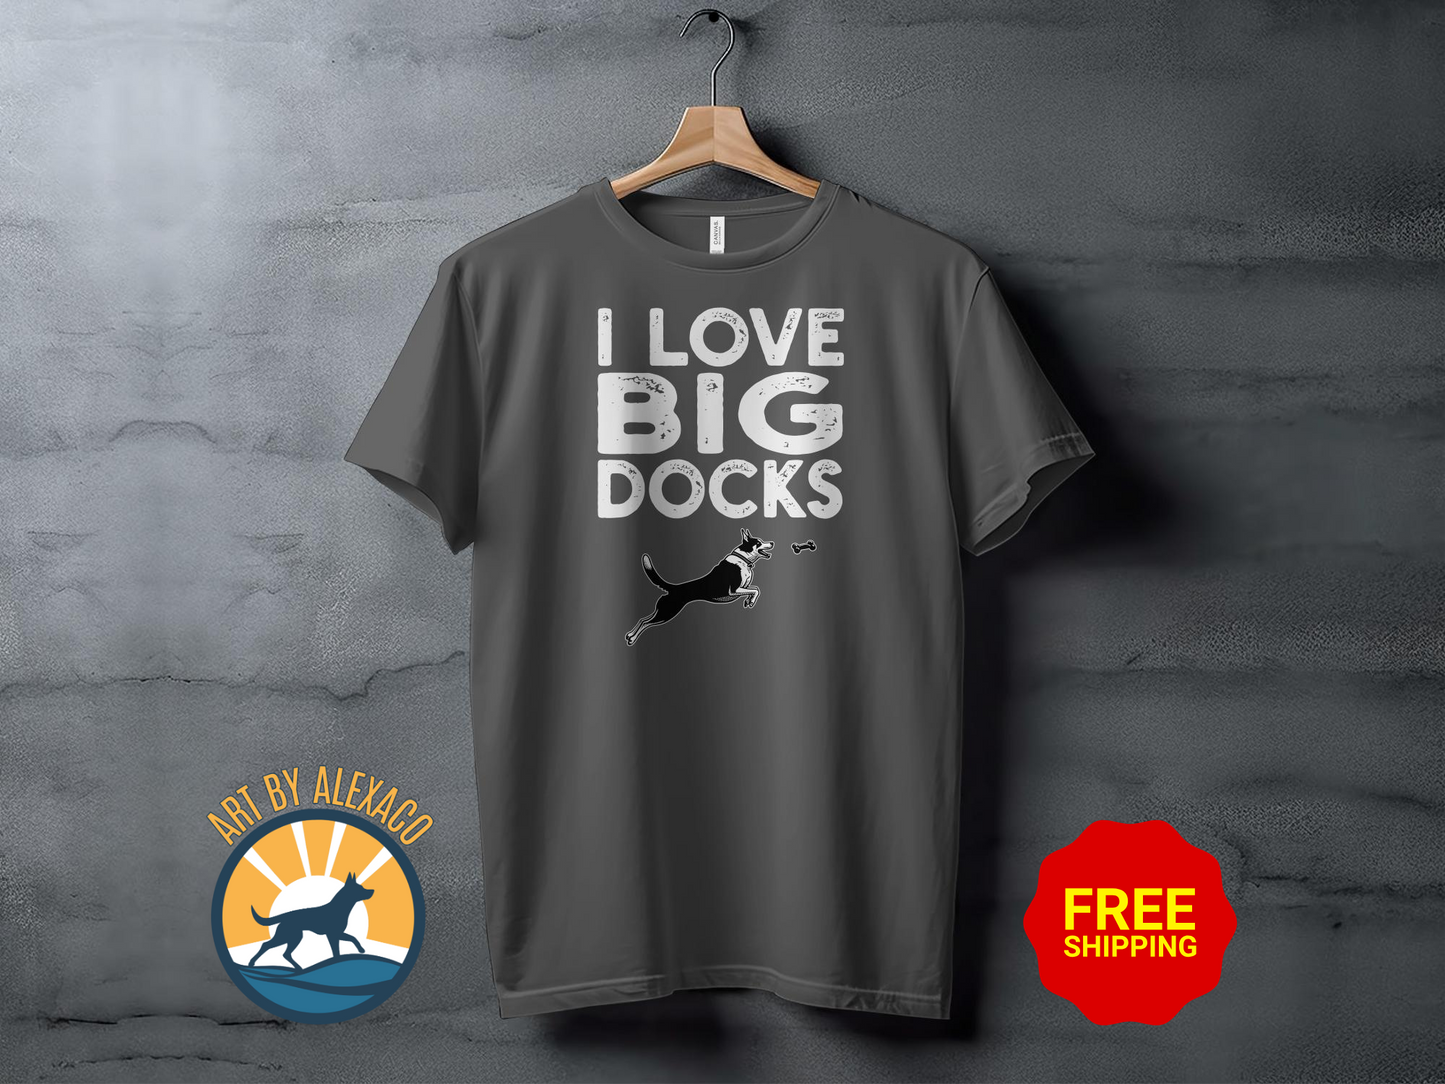 Funny Dock Diving Unisex T-Shirt: "I Love Big Docks"